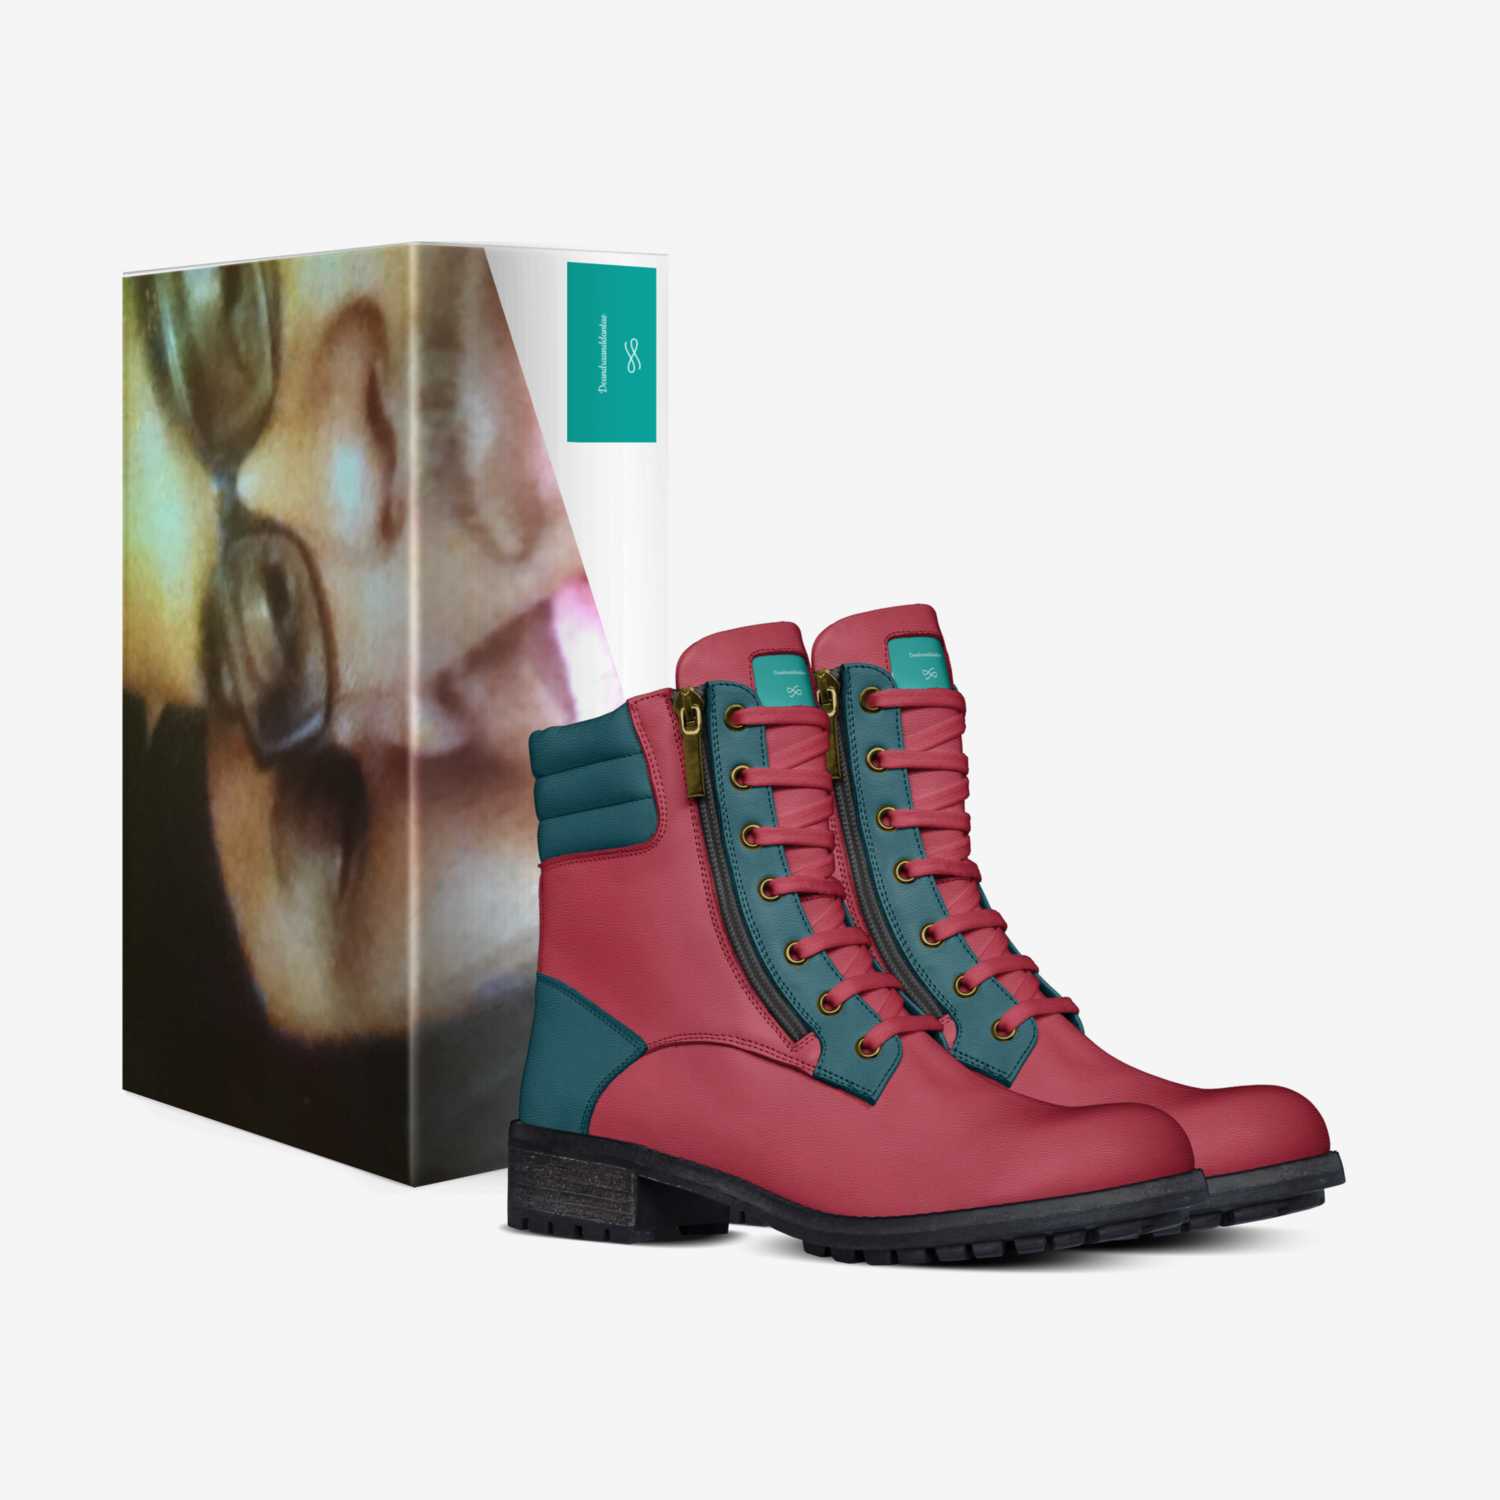 Deandraanddantae custom made in Italy shoes by Deandra | Box view